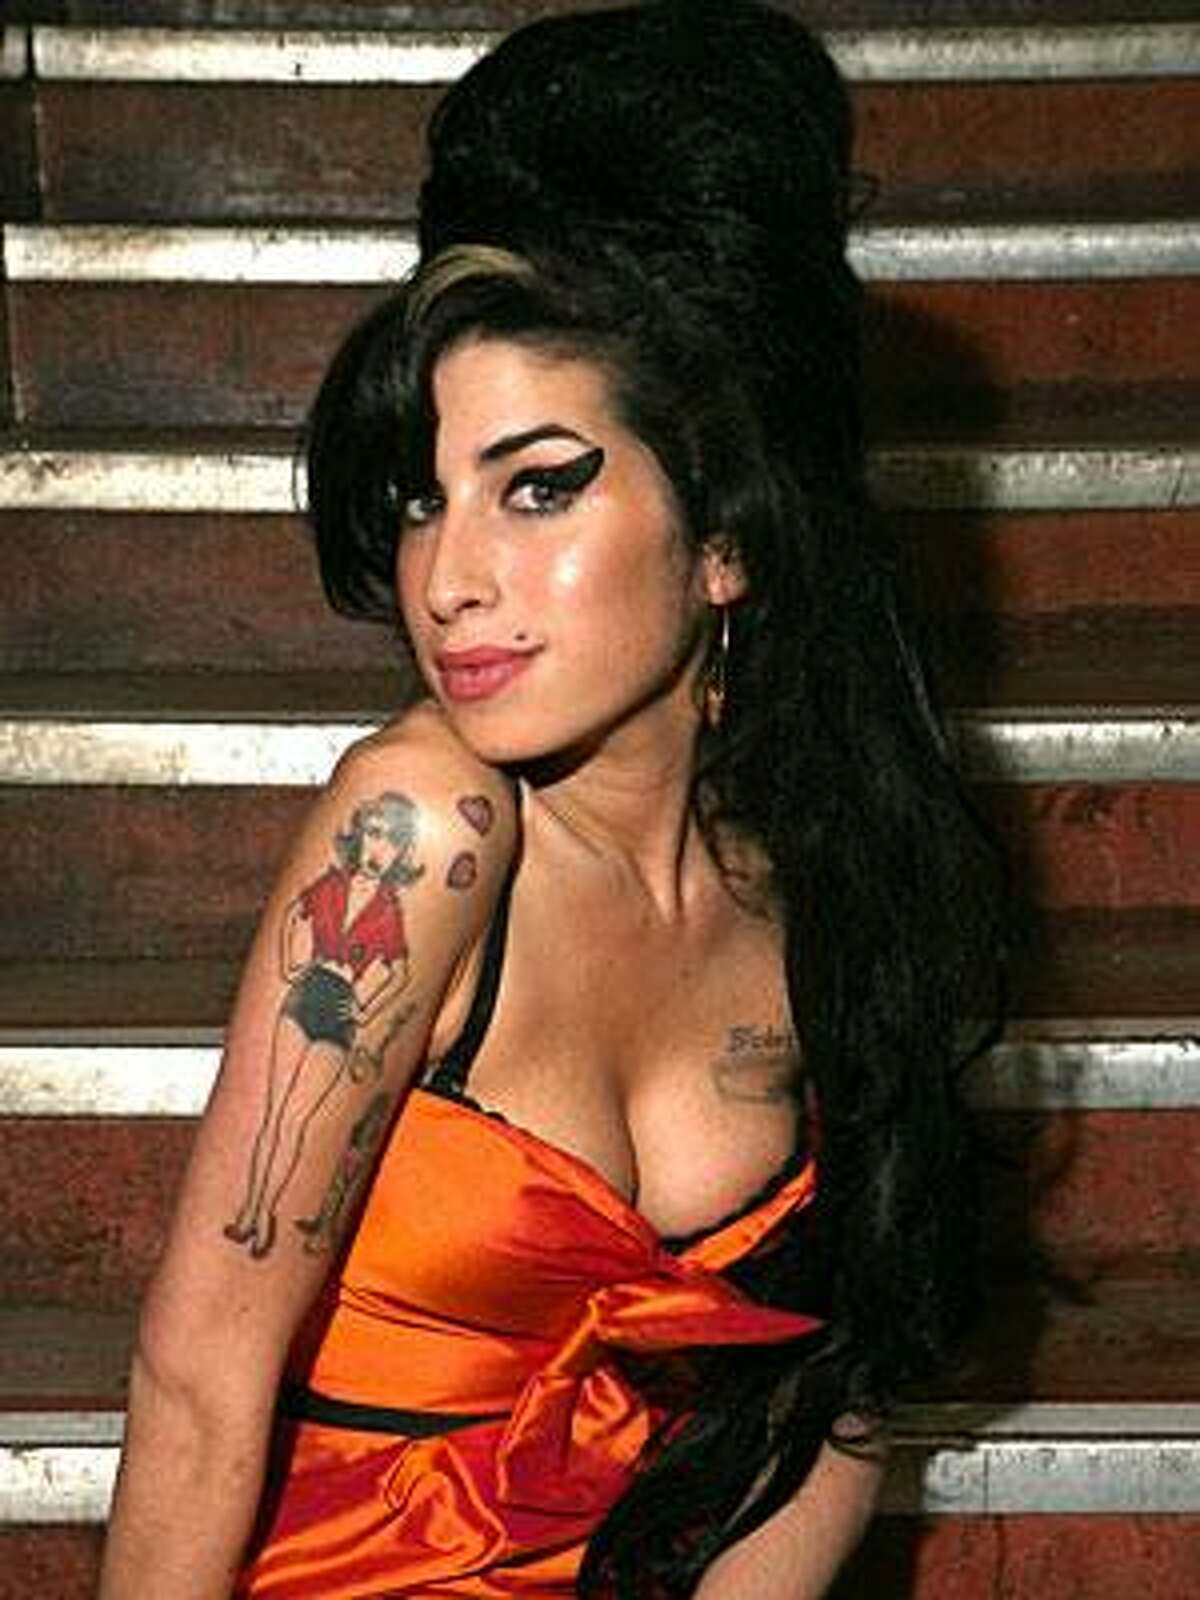 Amazoncom  Amy Winehouse Temporary Tattoos P9039  Childrens Temporary  Tattoos  Beauty  Personal Care